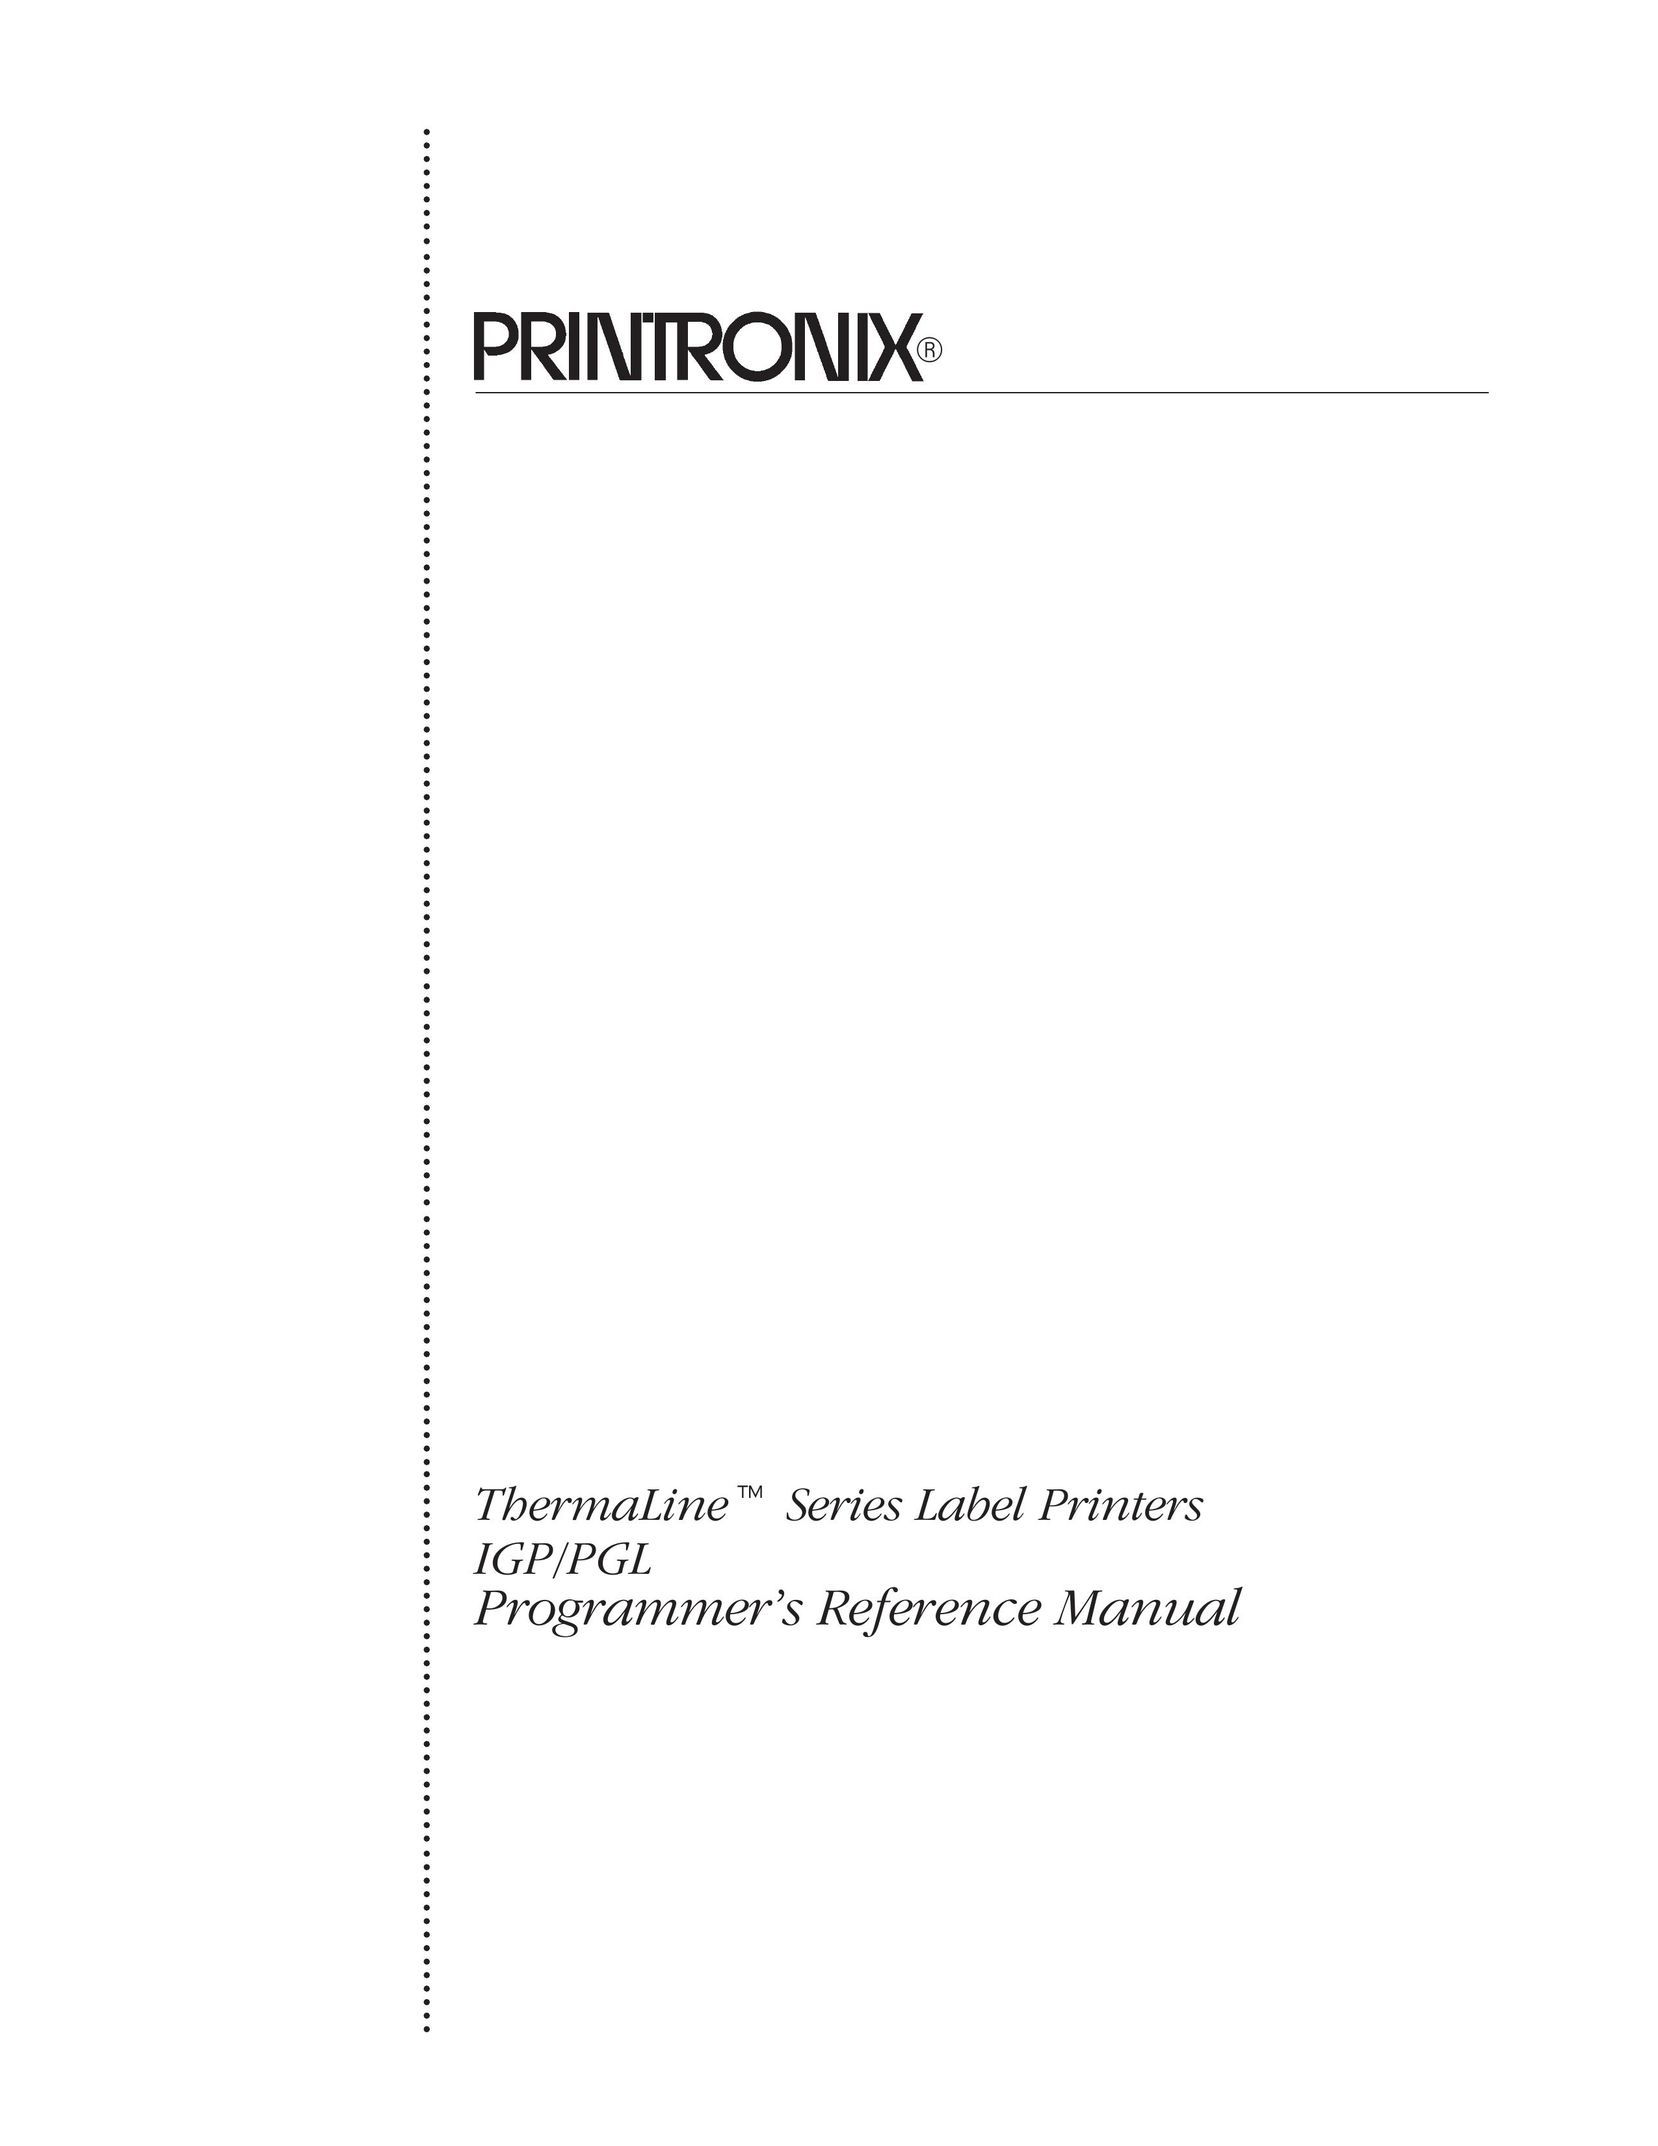 Printronix ThermaLine Series Printer User Manual